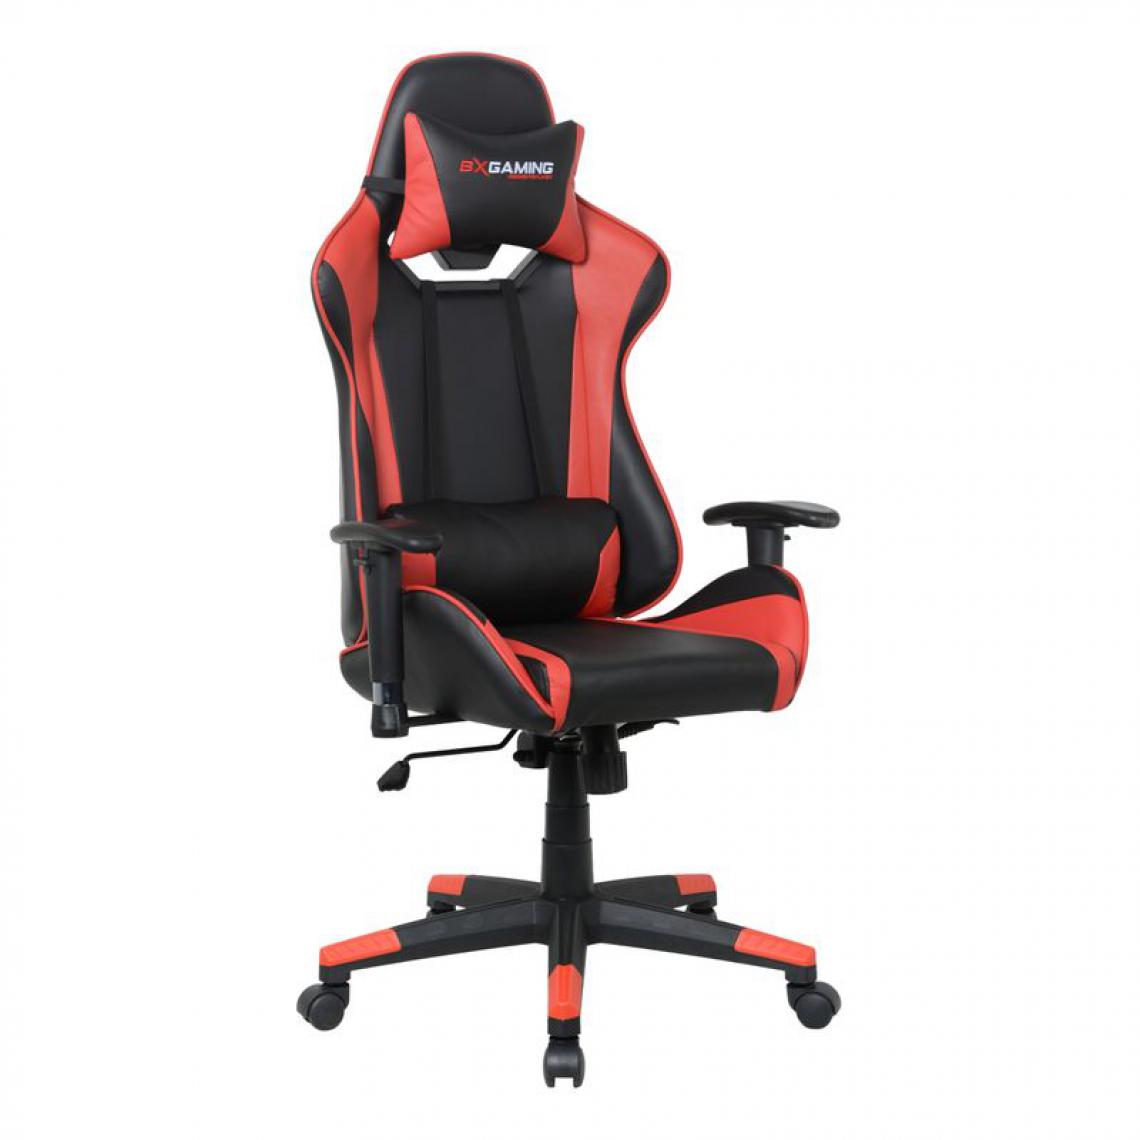 Bxgaming - Fauteuil de bureau Gamer FURIOUS Noir et rouge - Chaise gamer